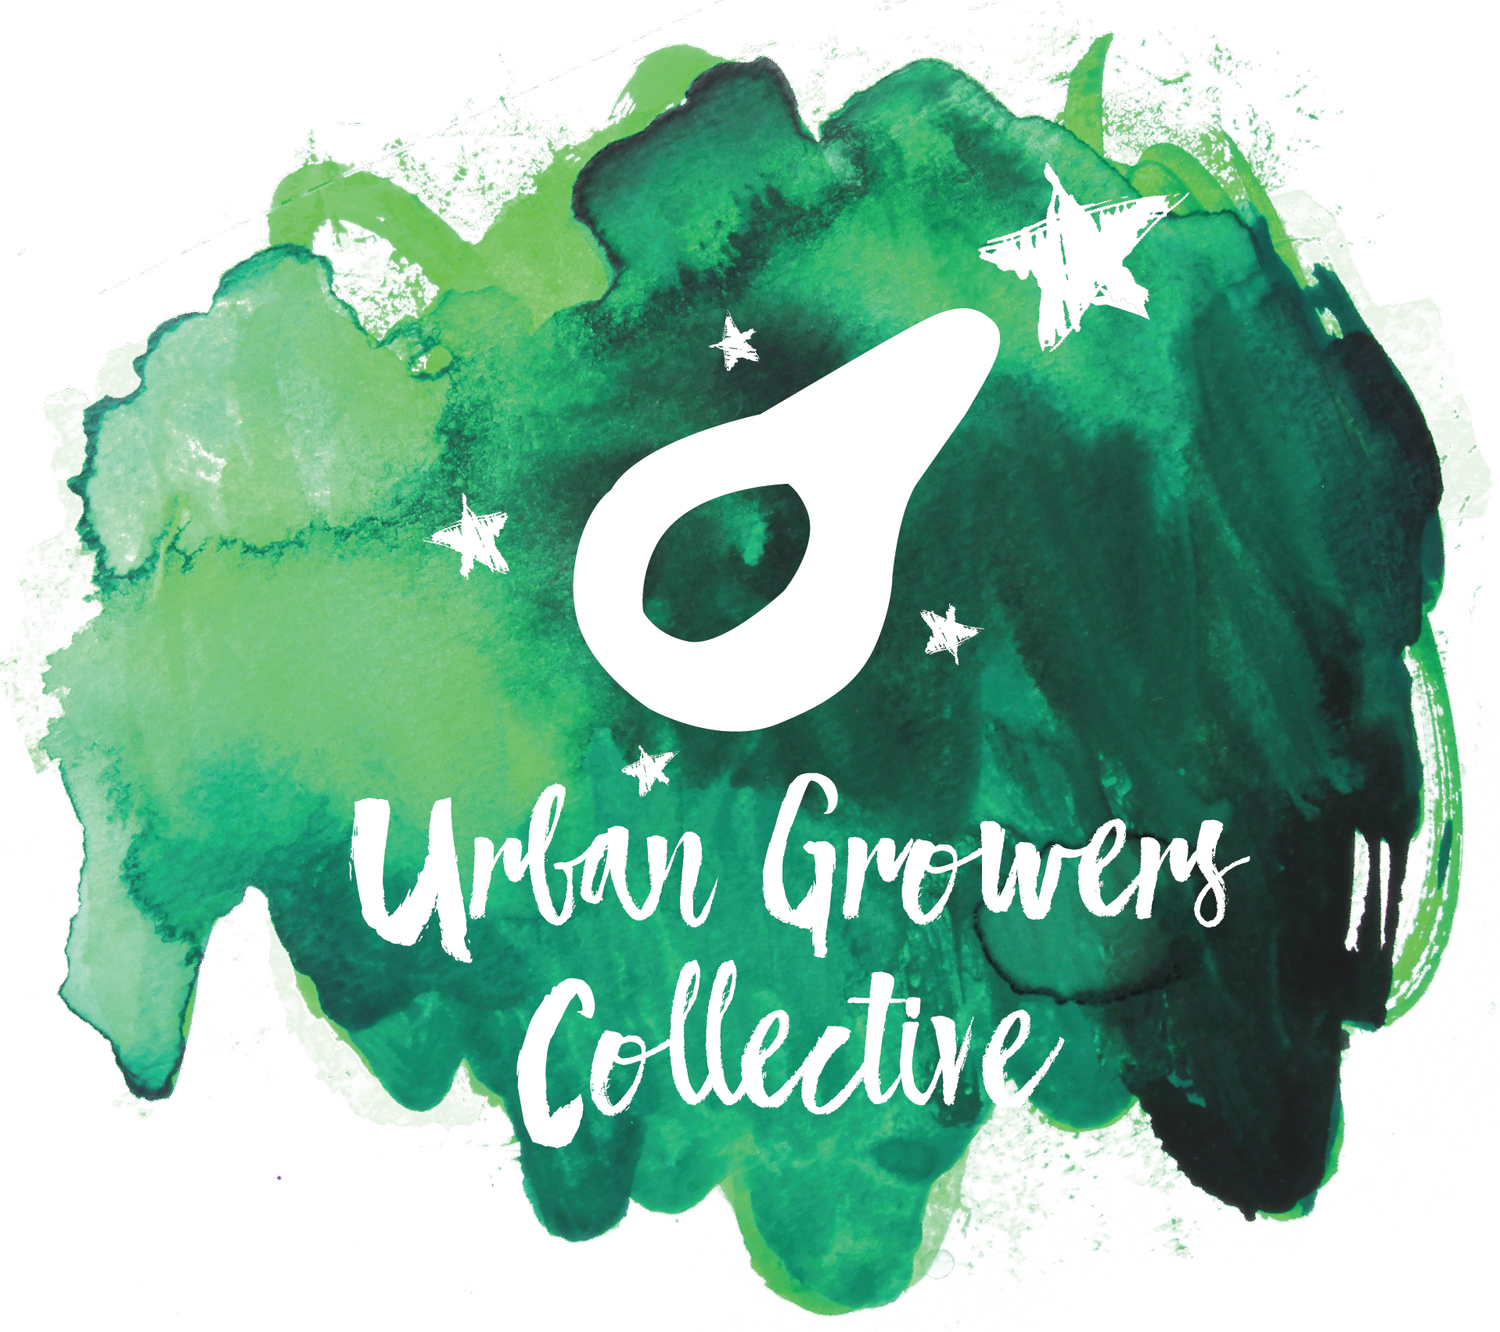 urbangrowerscollective.org